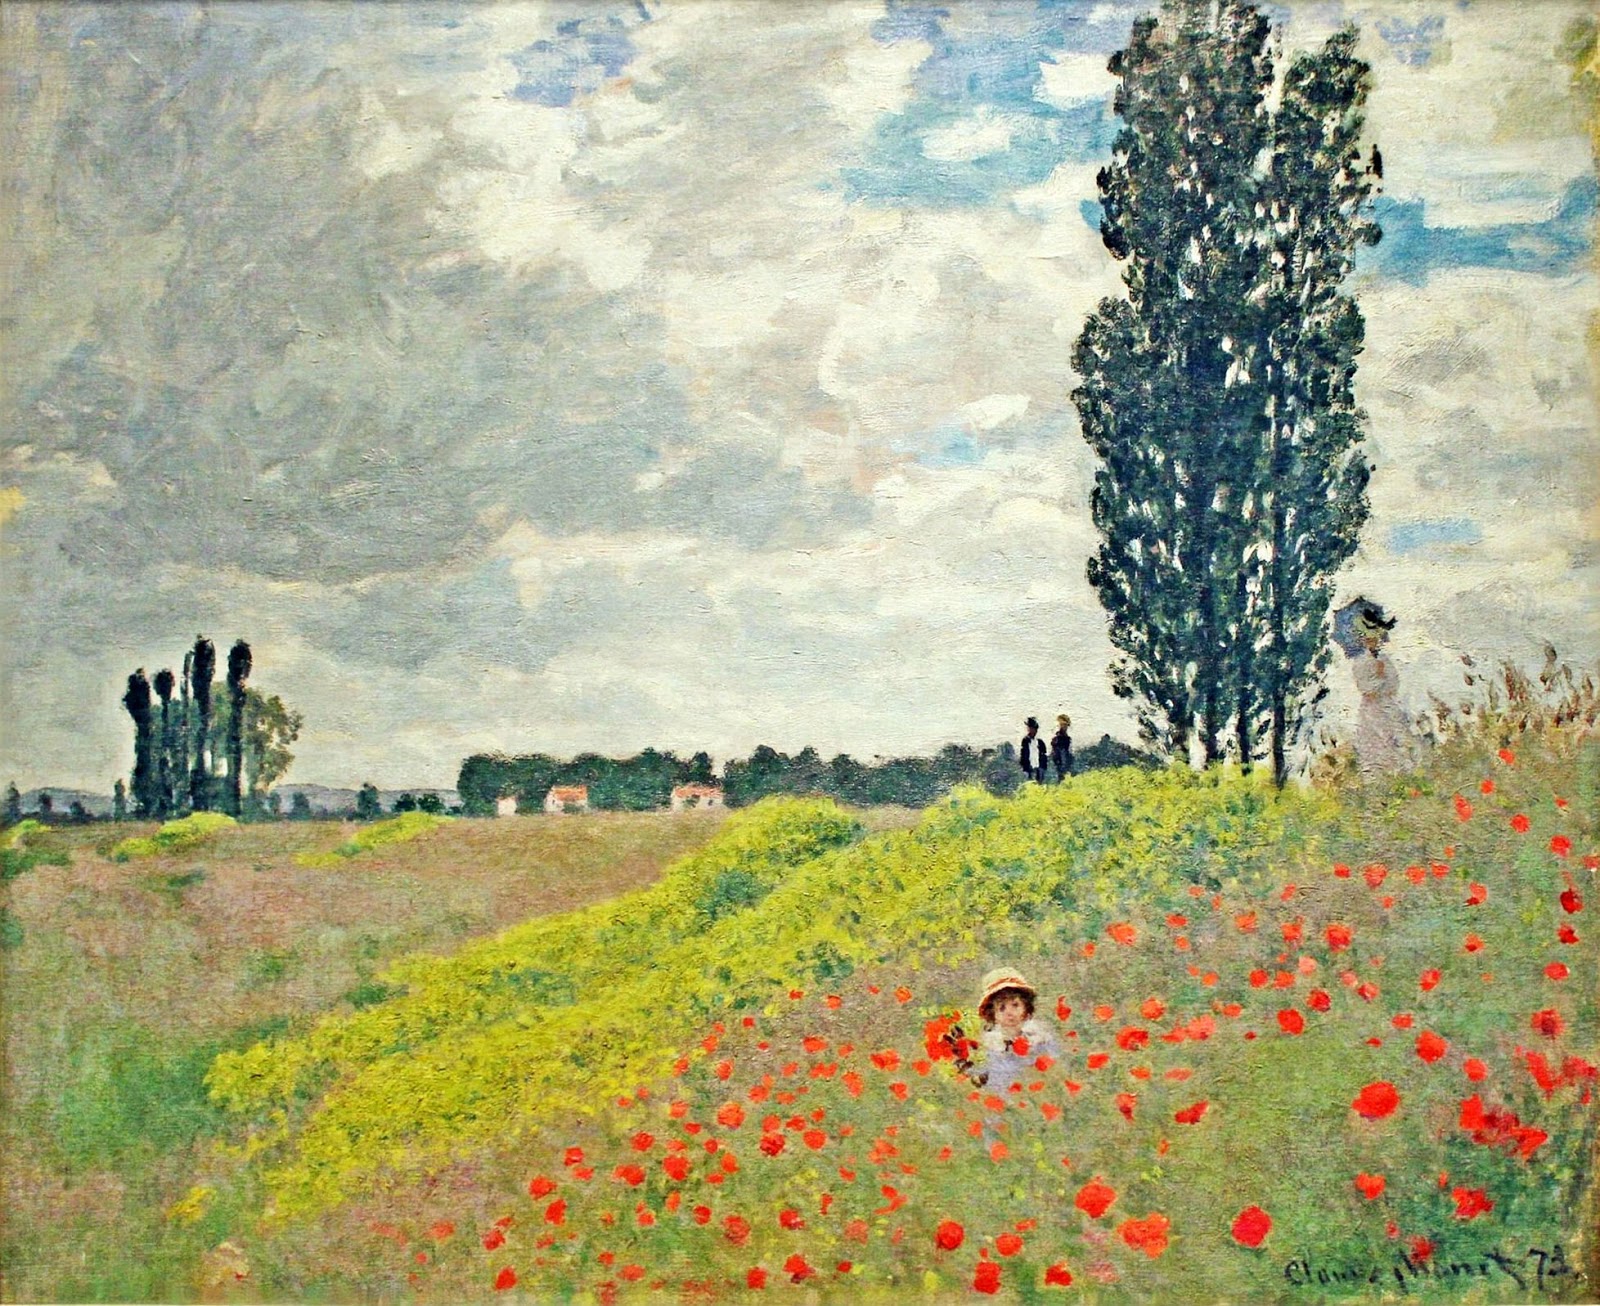 Claude+Monet-1840-1926 (955).jpg